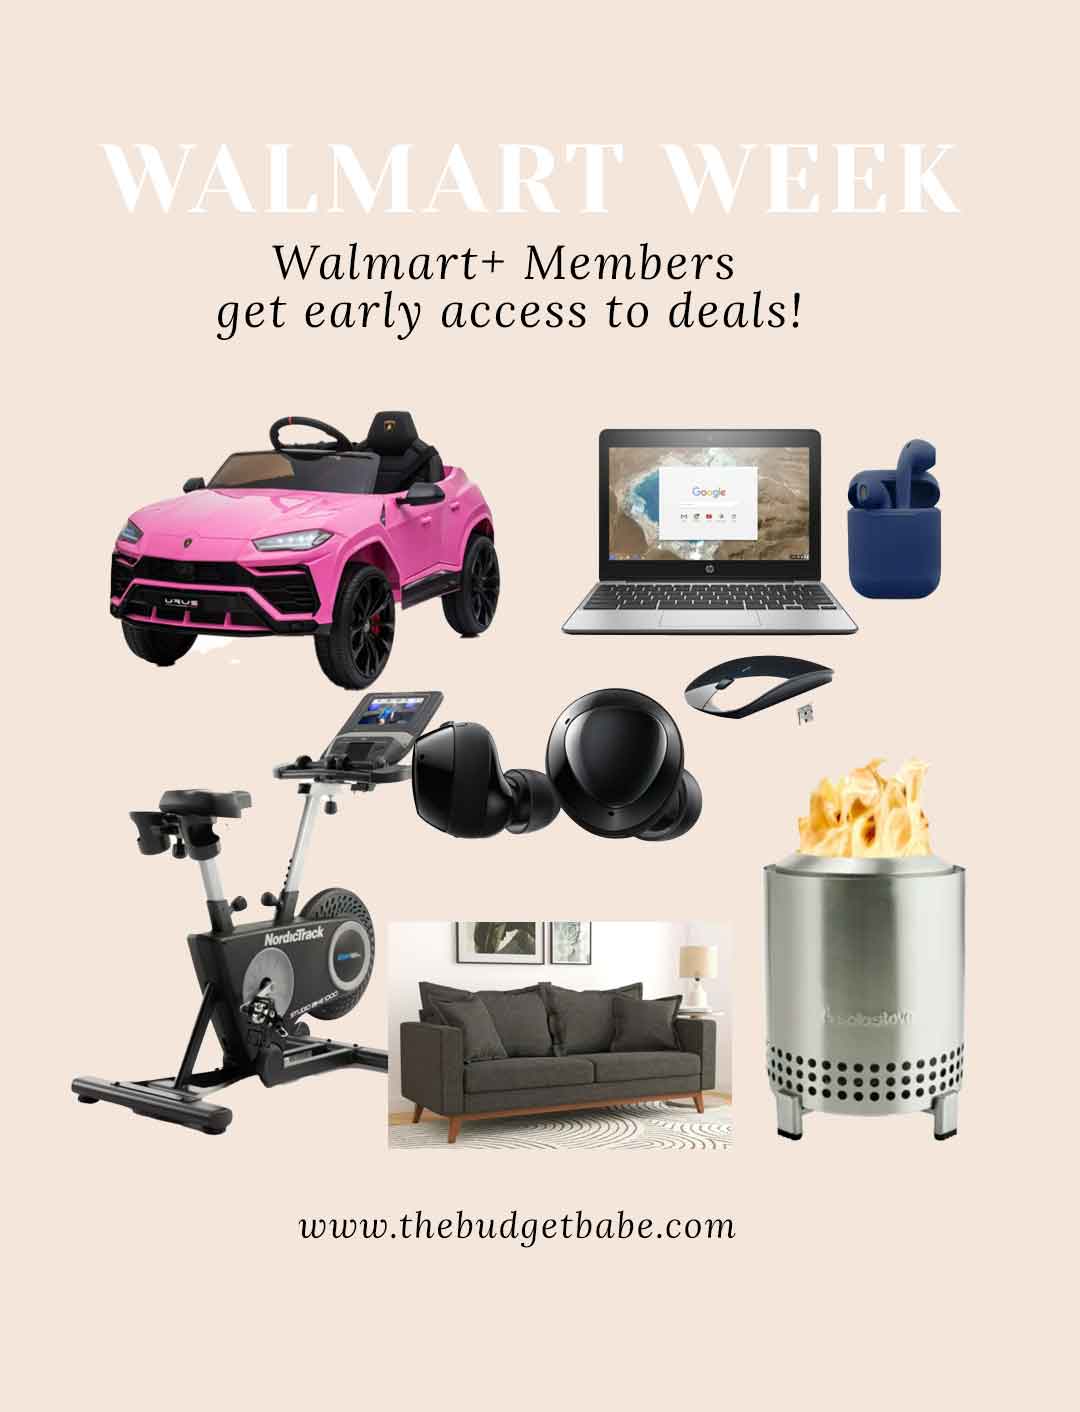 Walmart Week kicks off today for Walmart+ Members (and membership is now 50% off!)